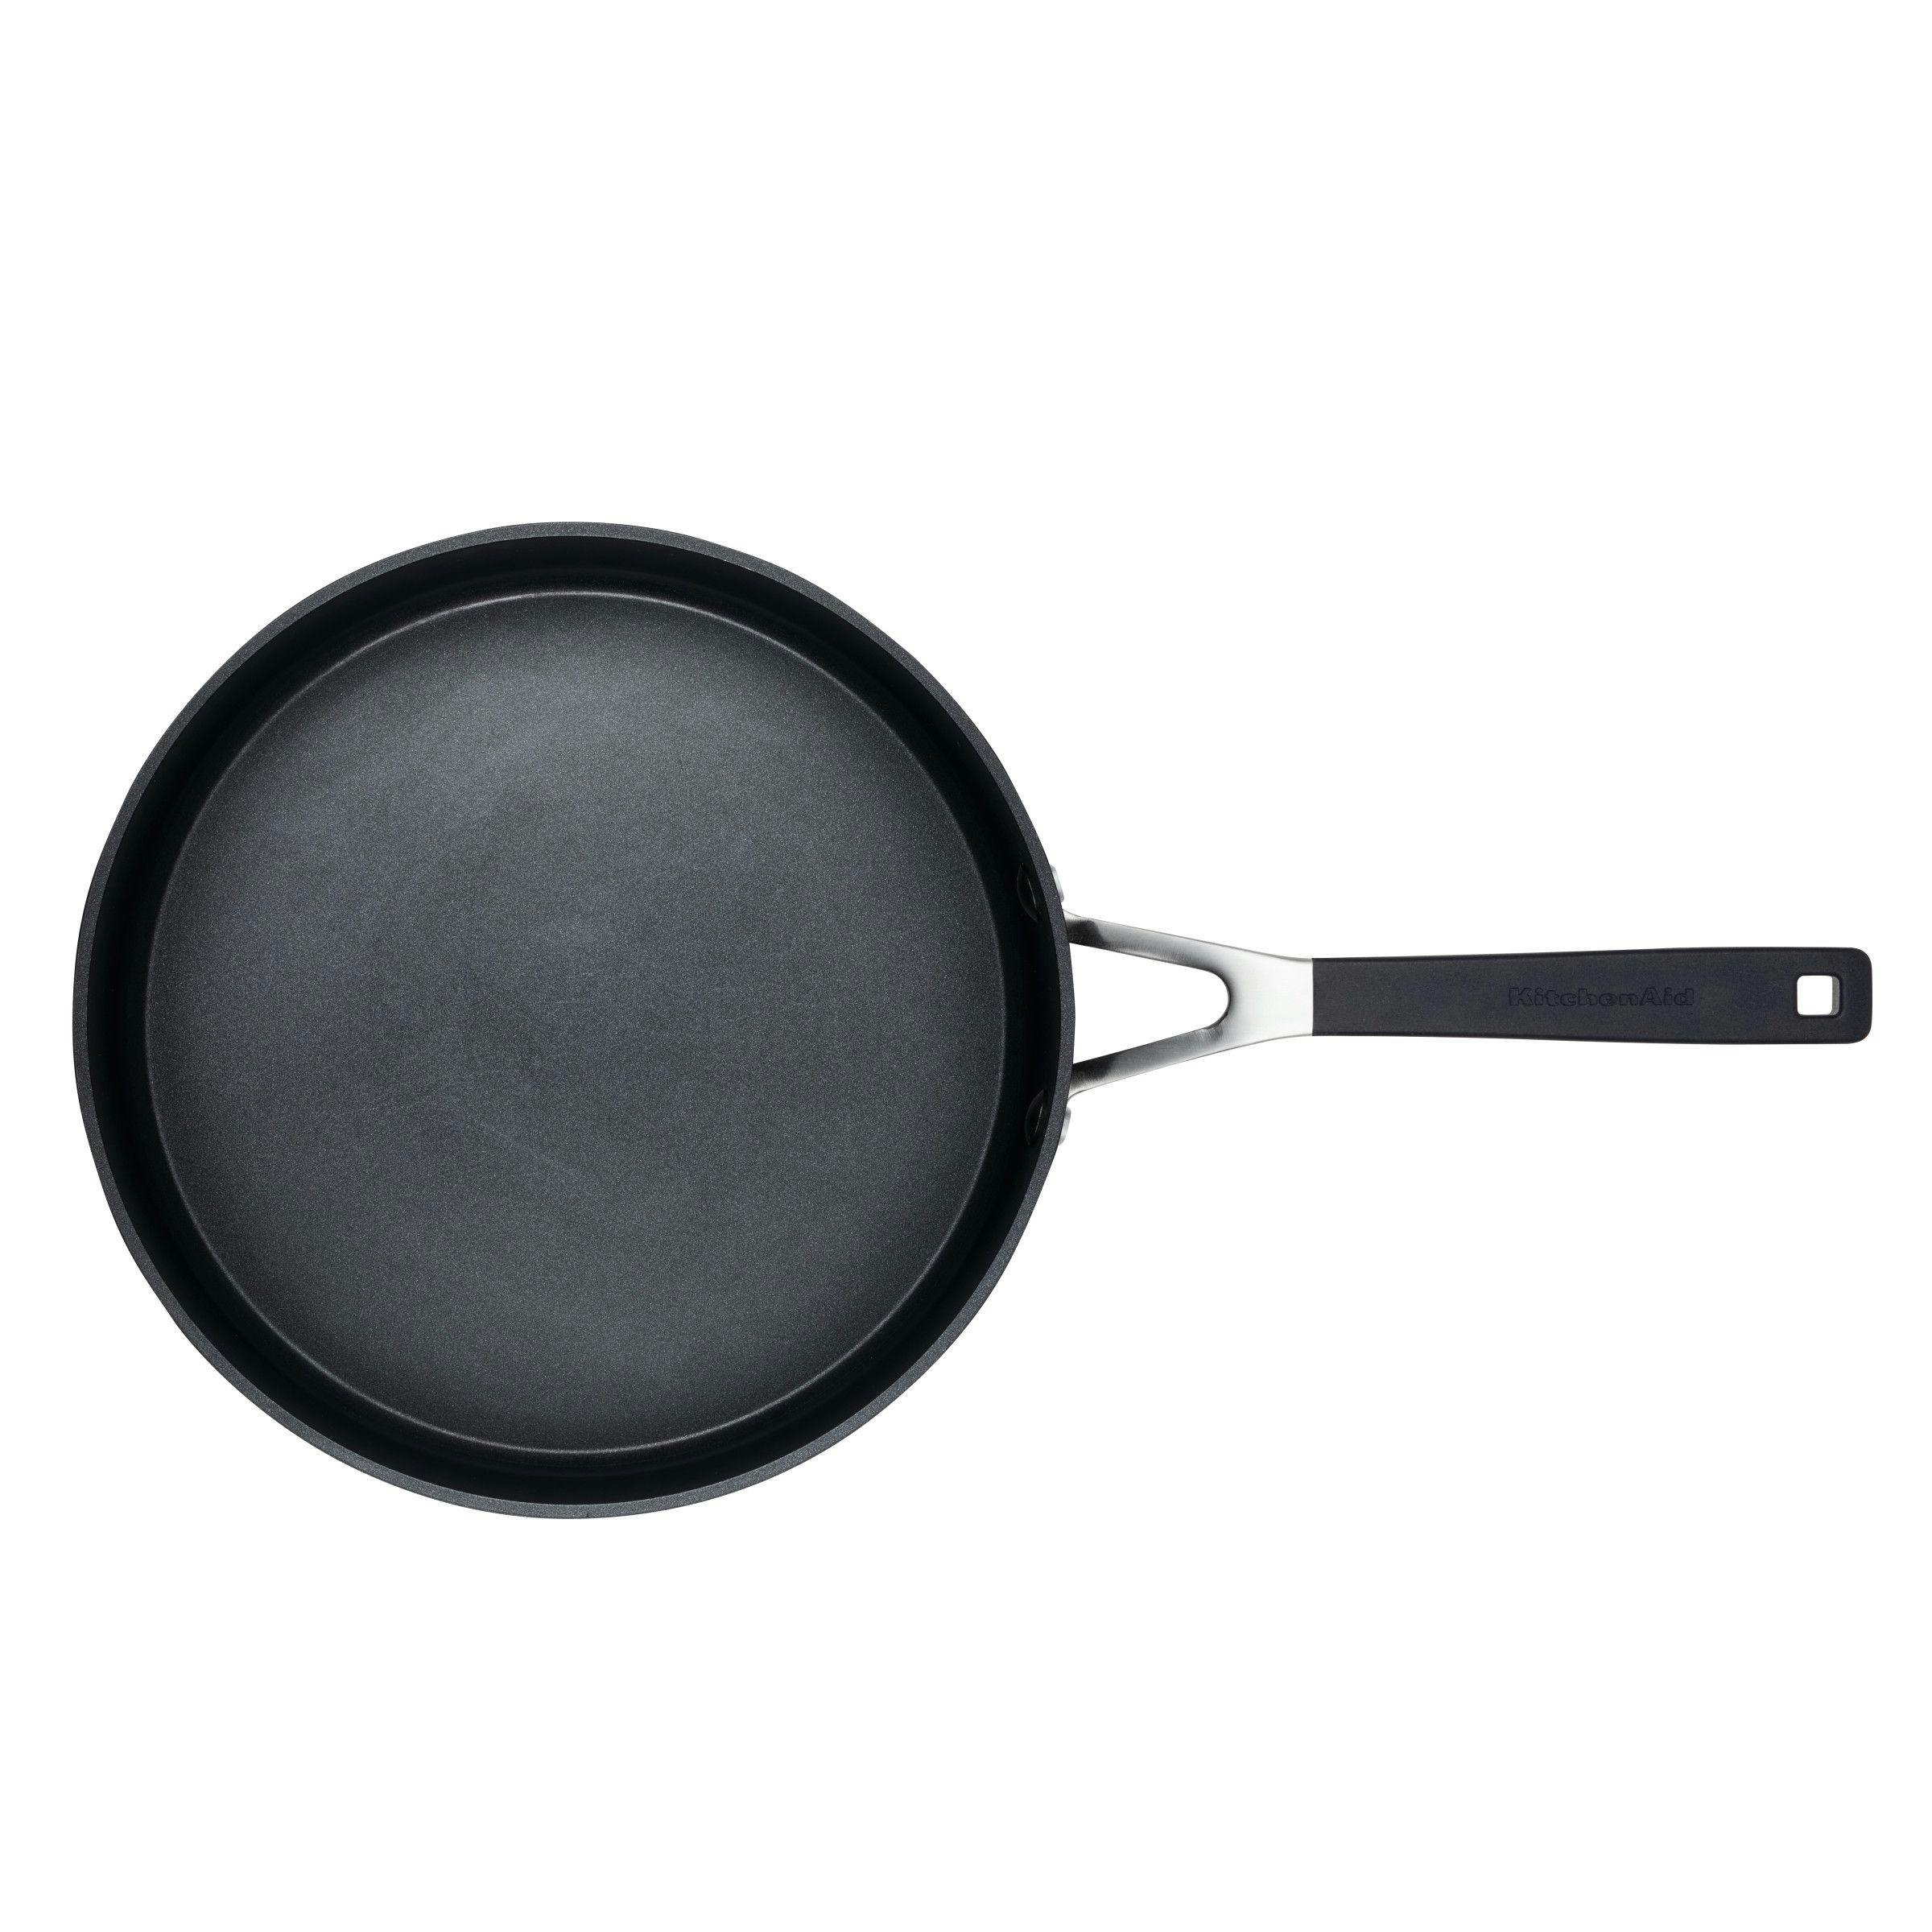 KitchenAid Hard Anodized Nonstick Everything Pan with Lid, 5-Quart, Onyx  Black 